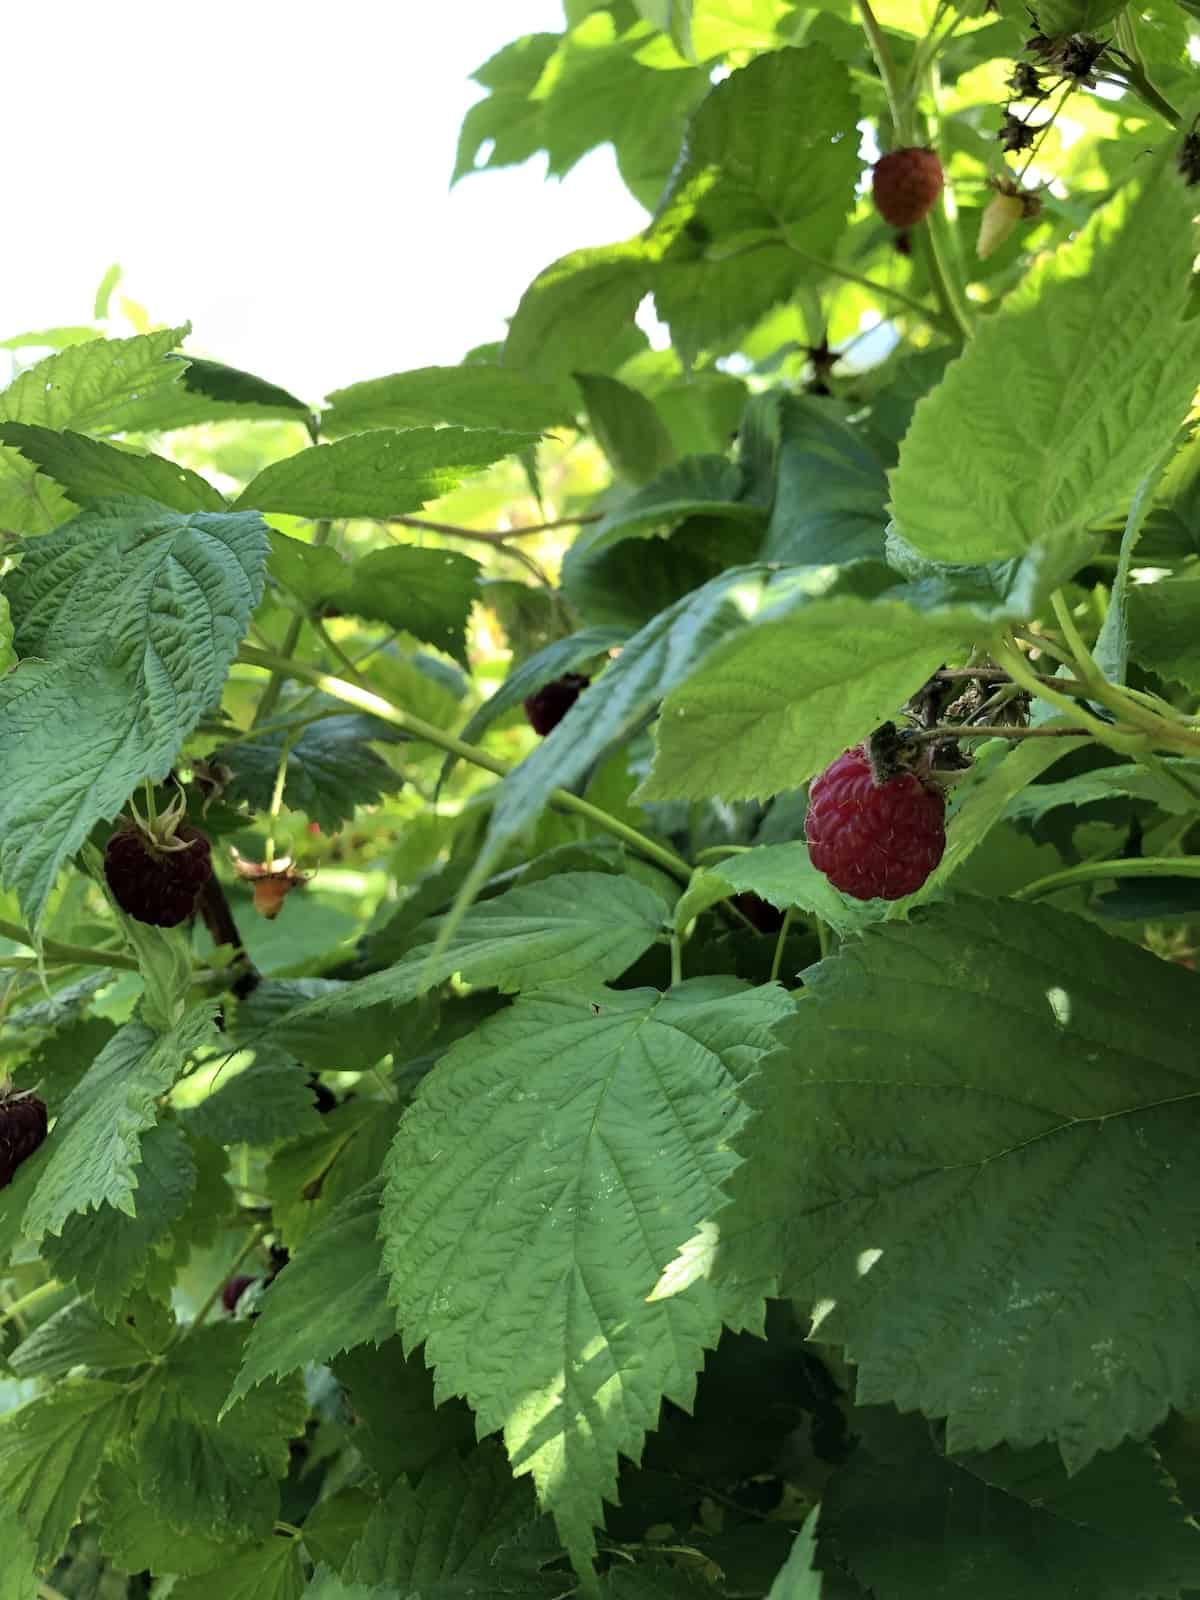 Raspberries growing on shady side of trellis